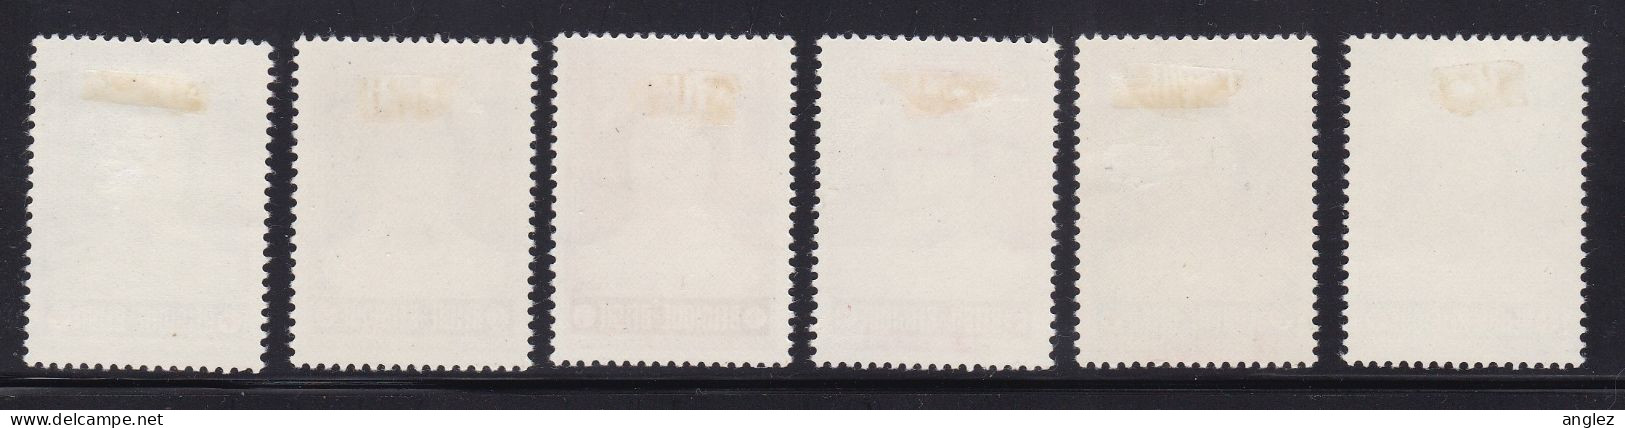 Belgium - 1953 Red Cross / Princess Josephine Charlotte Charity Set 6v MH - Unused Stamps